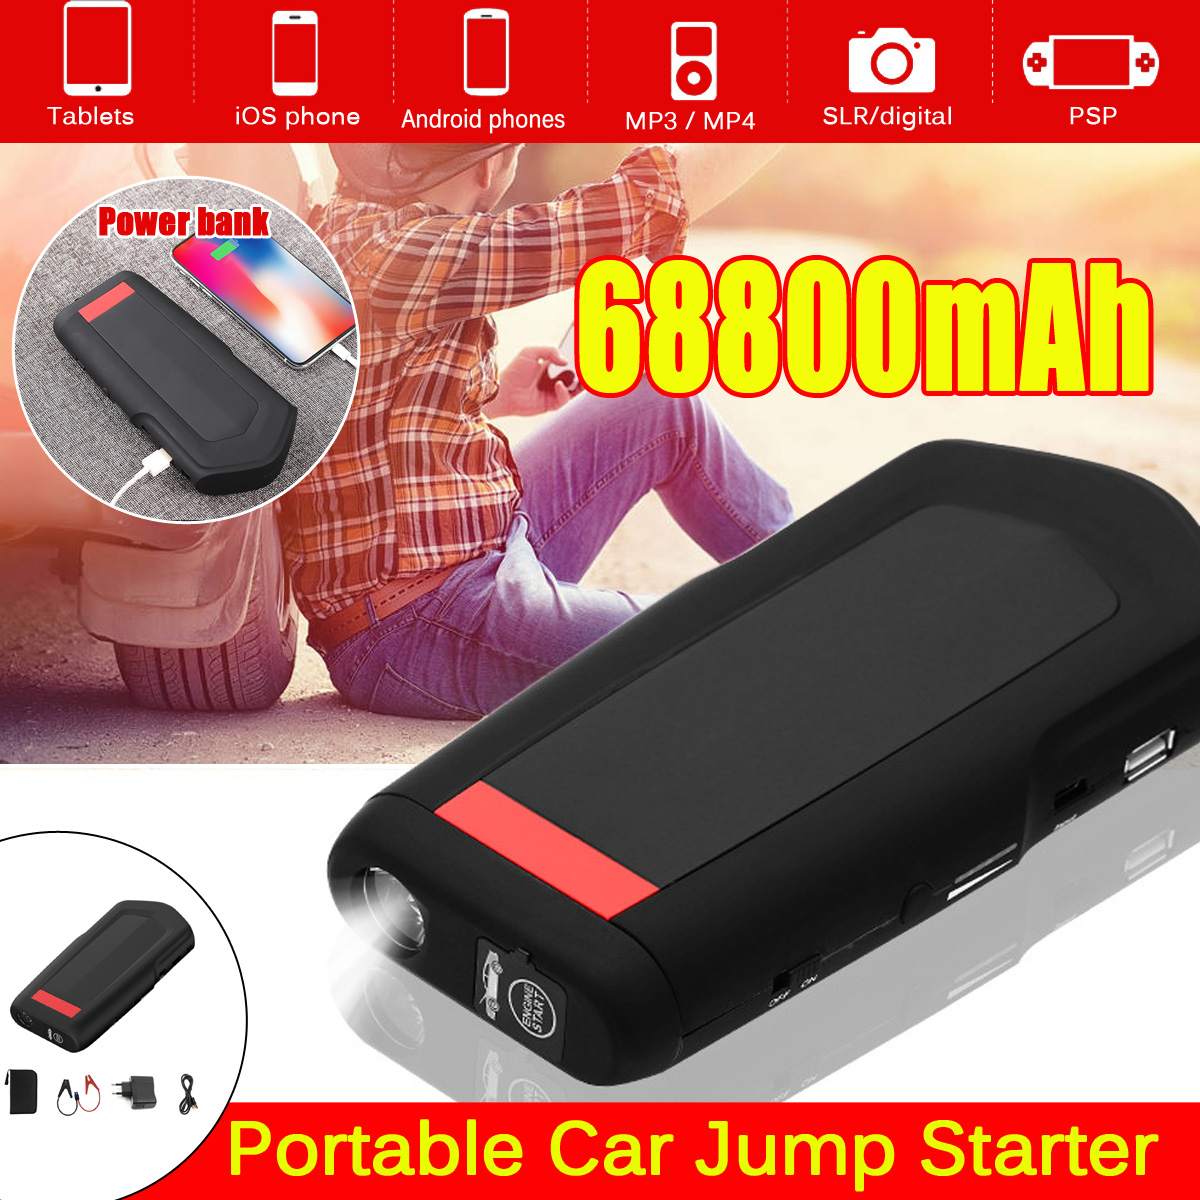 68800mah-Car-Jump-Starter-Car-Battery-Booster-Portable-Power-Pack-Emergency-Car-Power-Bank-1601304-1